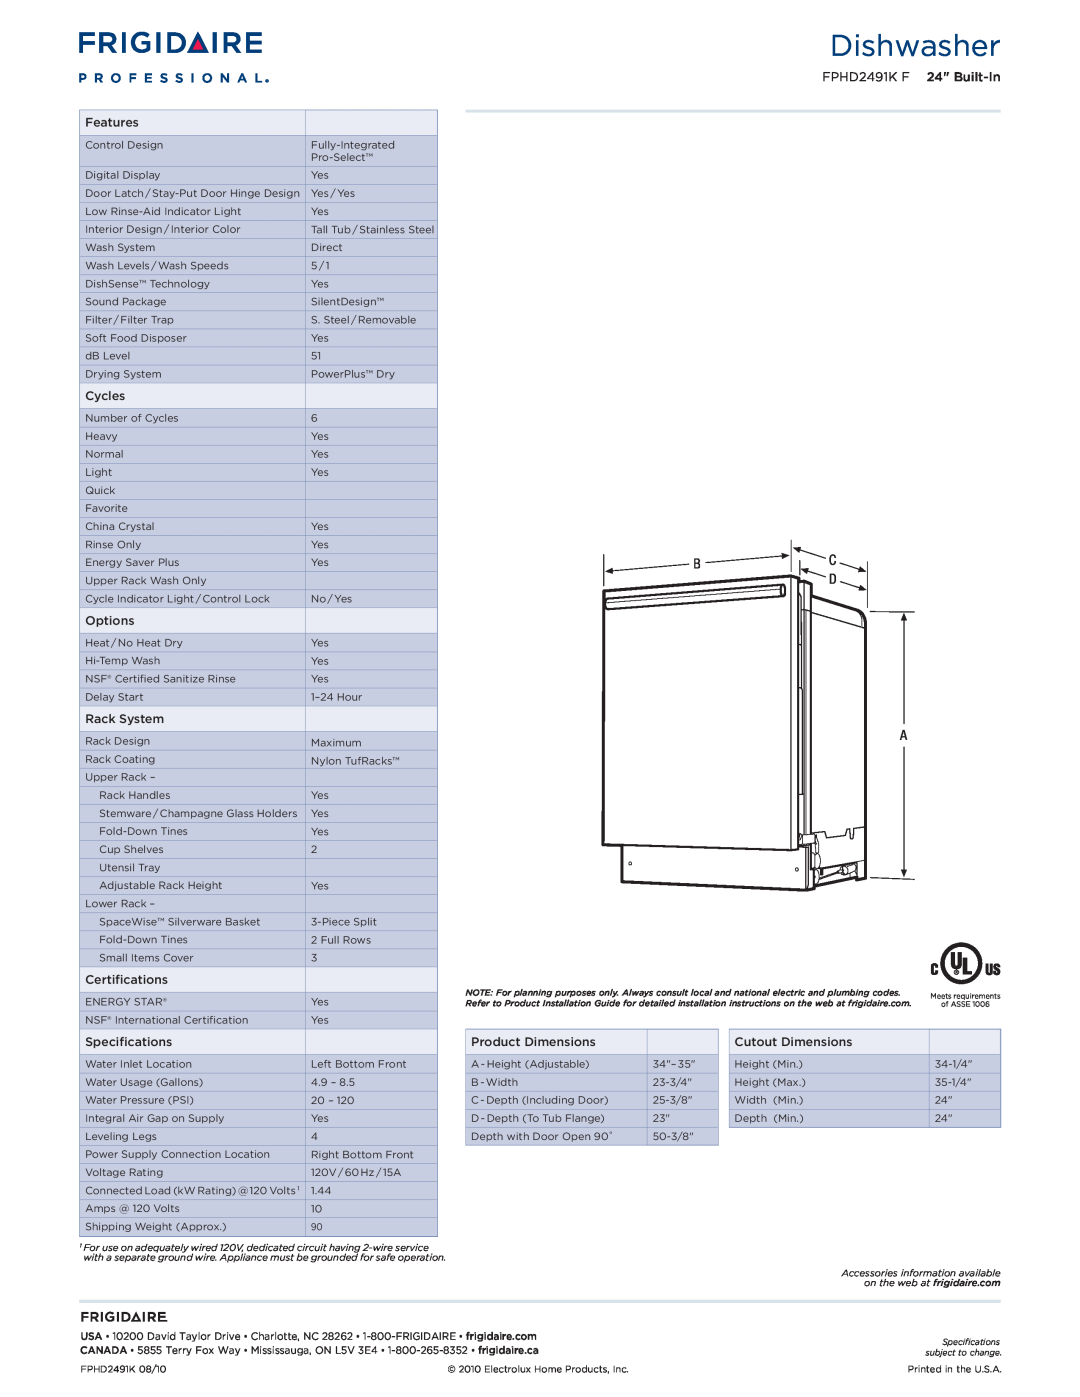 Frigidaire dimensions Dishwasher, B C D A, FPHD2491K F 24 Built-In 